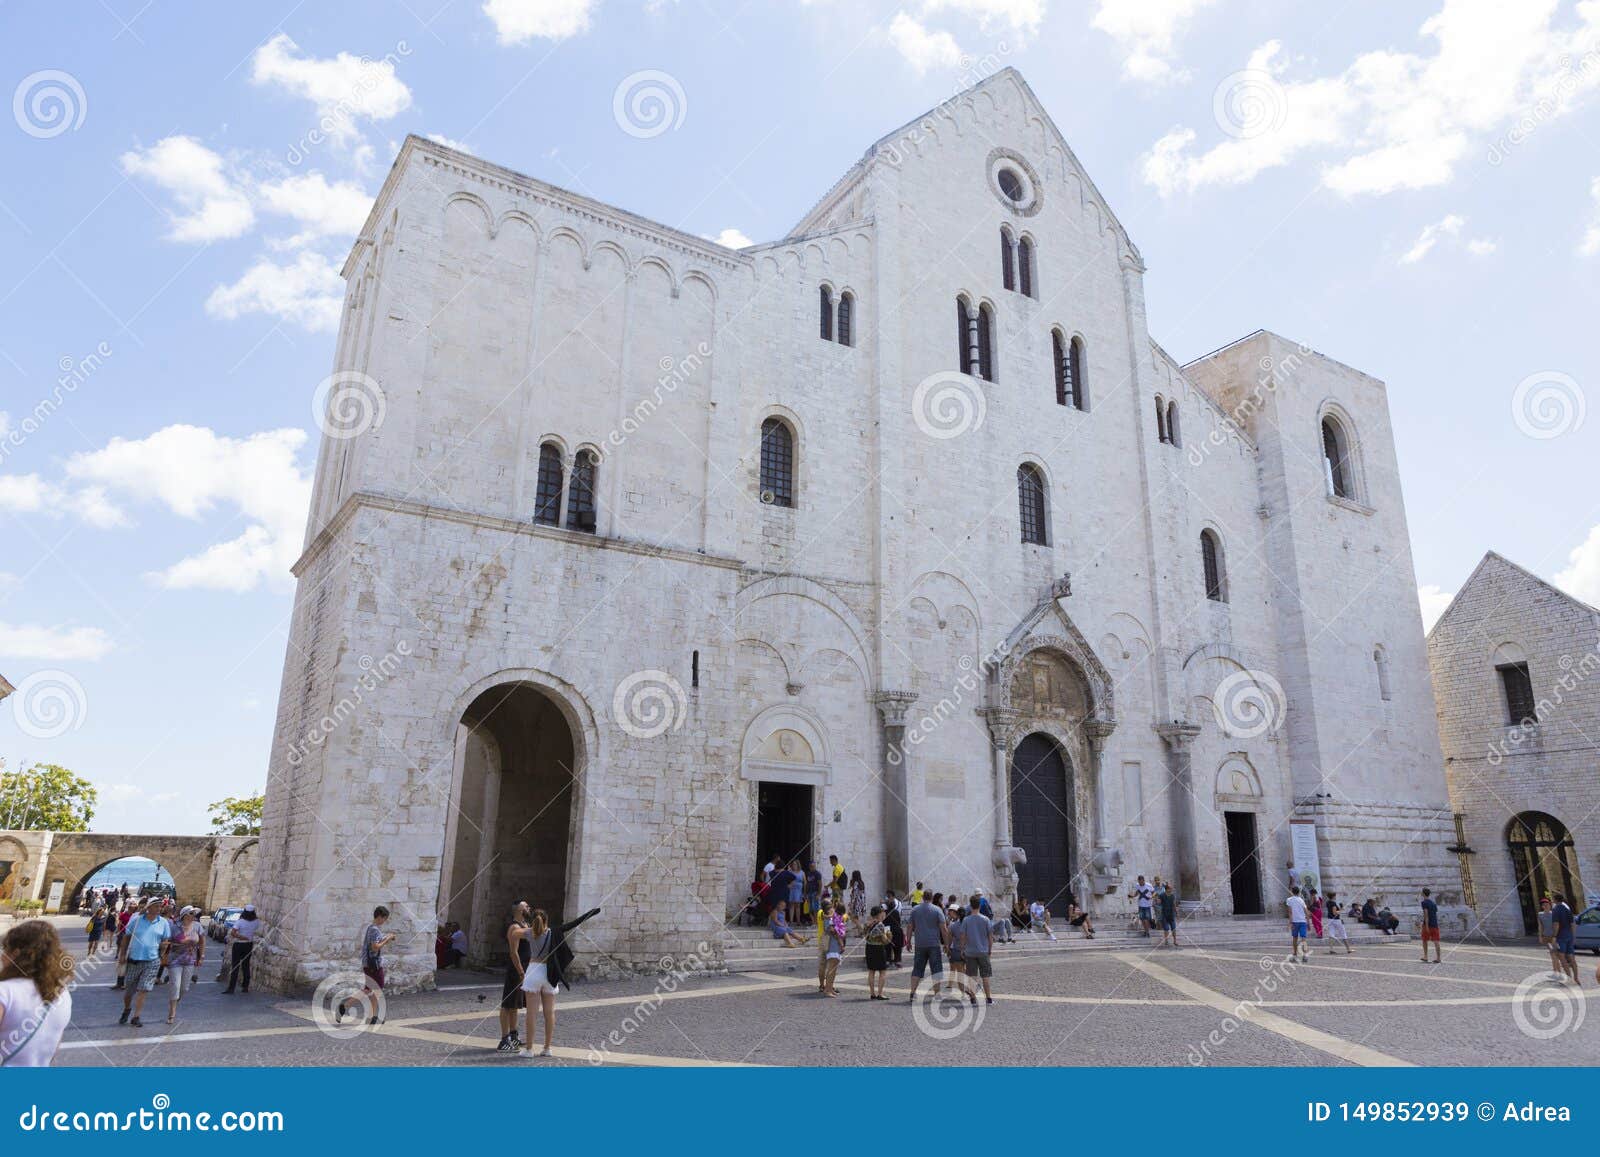 basilica san nicola from brai city